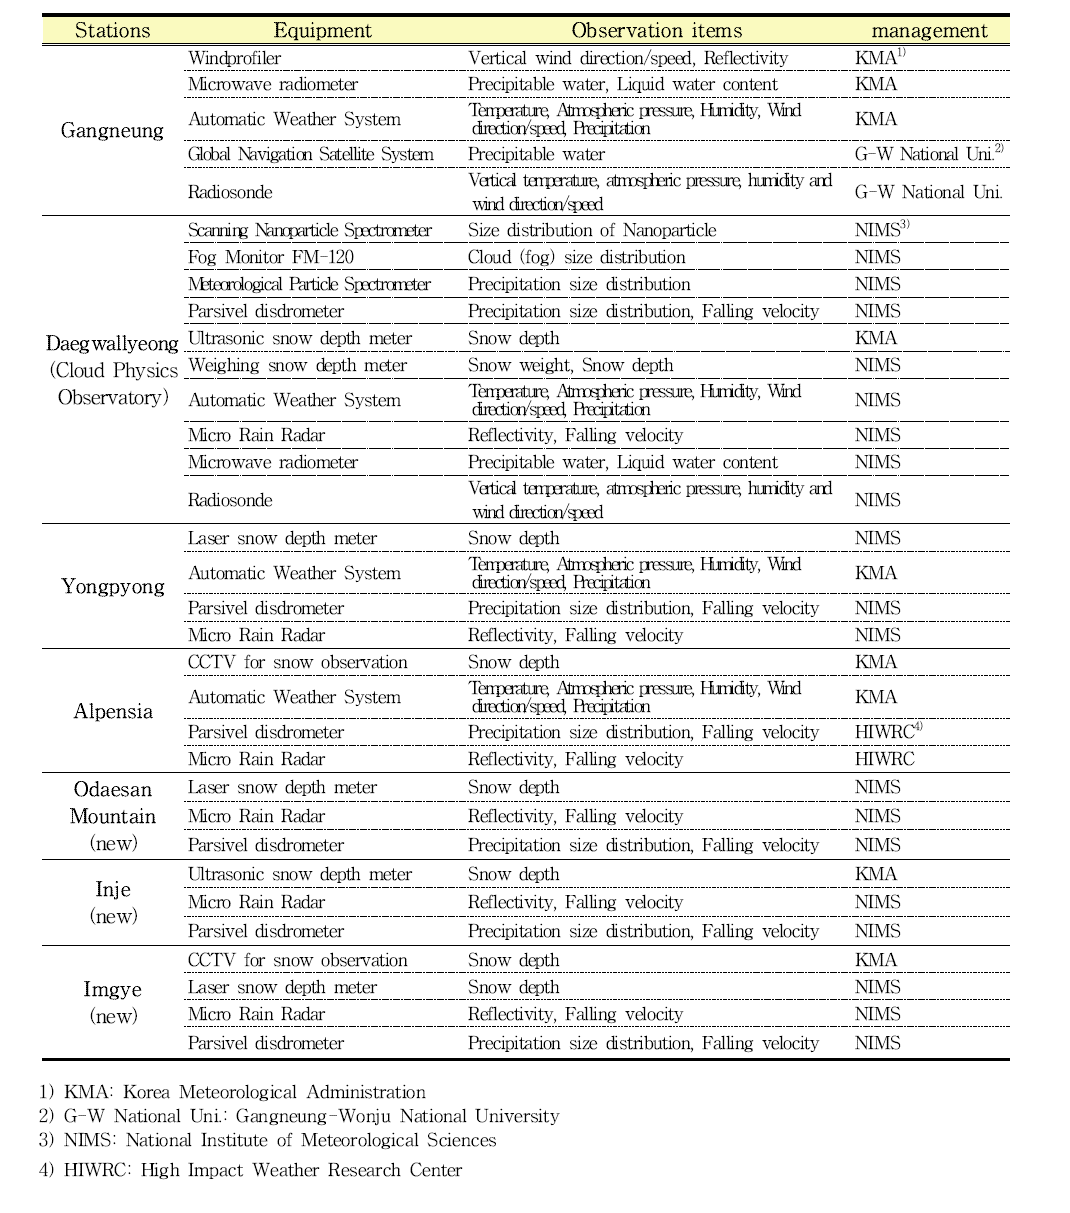 Detailed observational instrument list of each observational stations for experimental verification